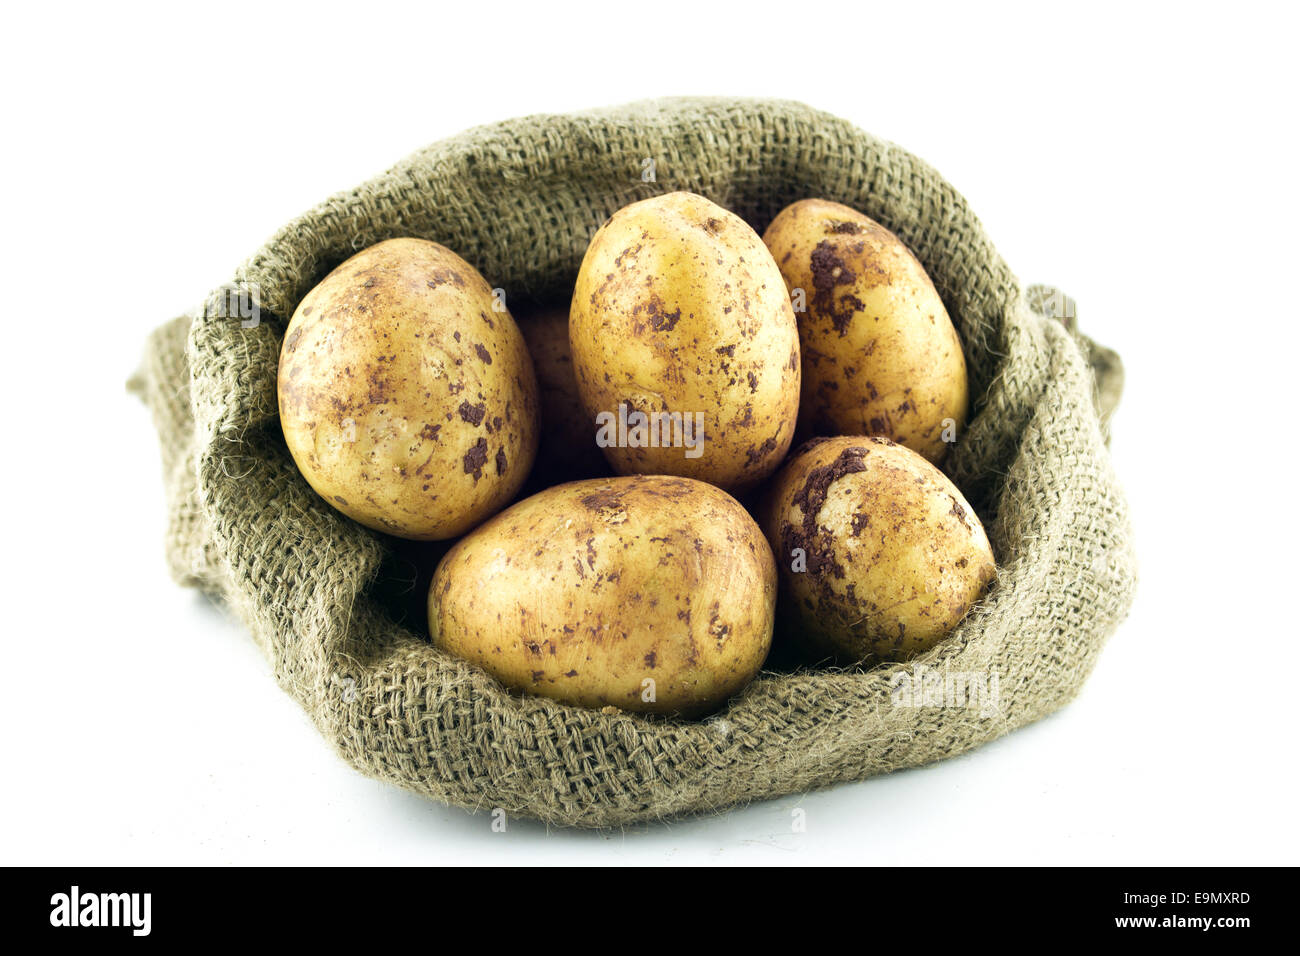 Potato sack hi-res stock photography and images - Alamy